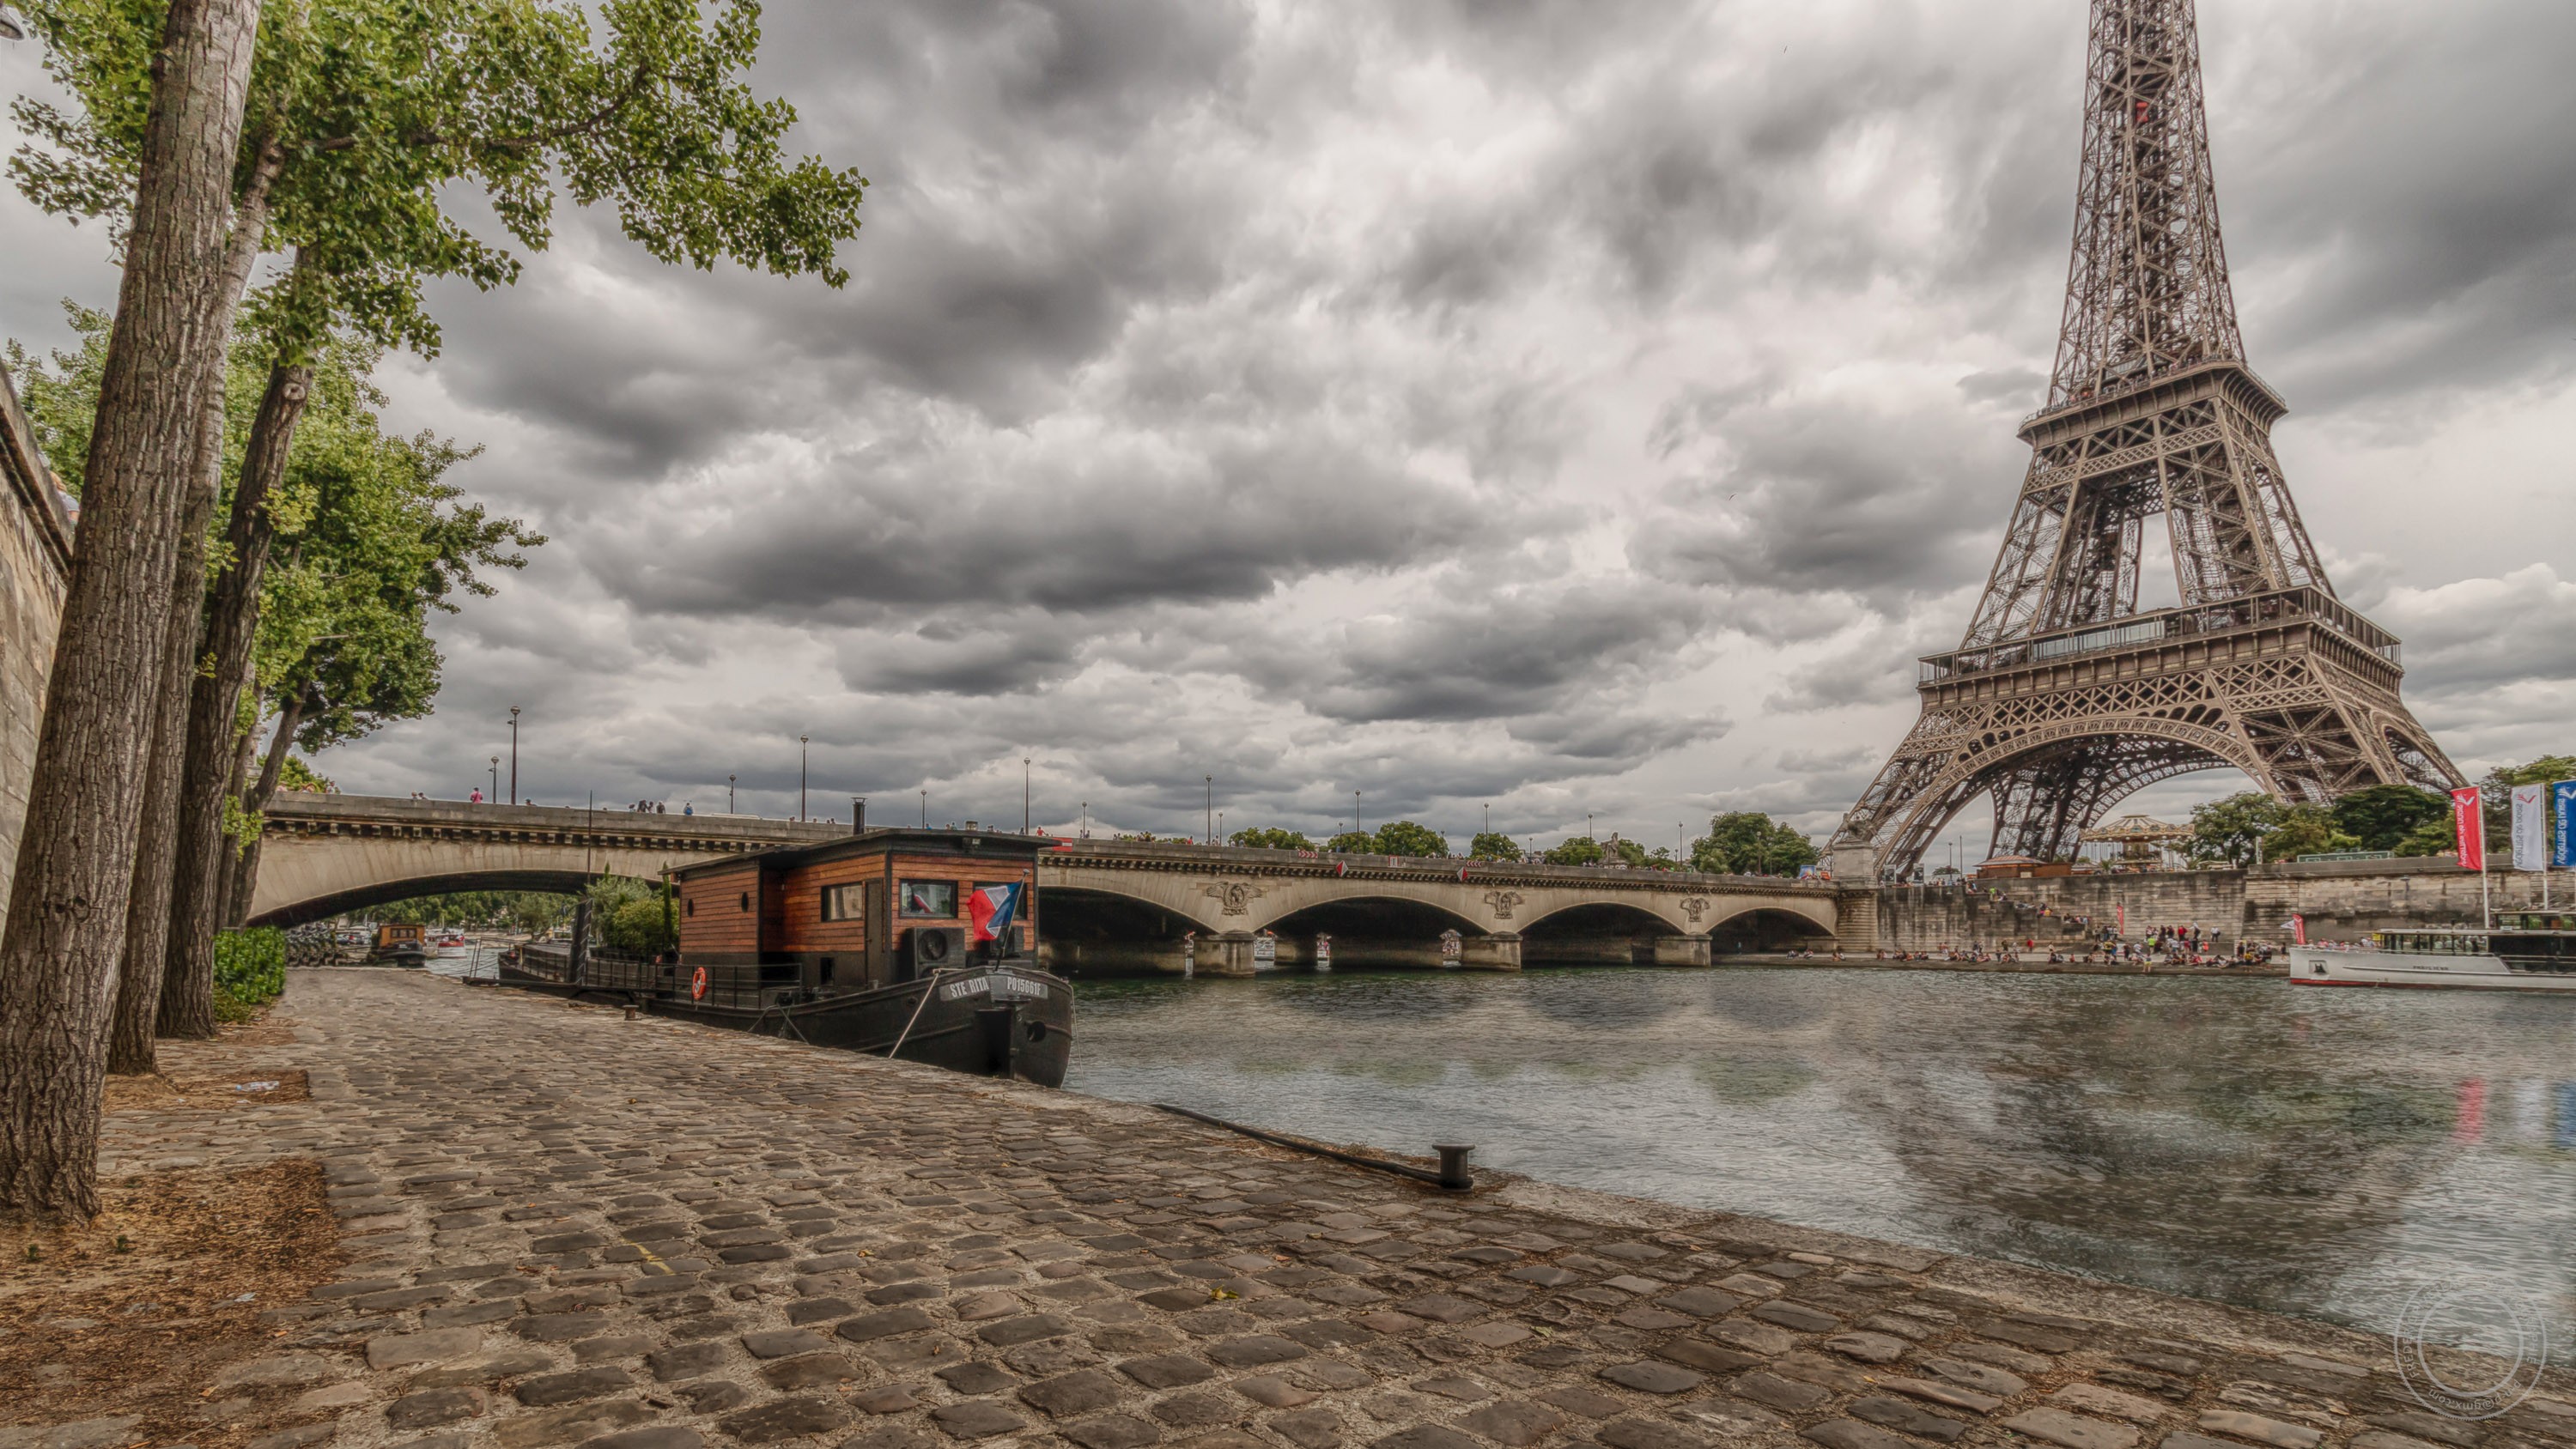 Paris, Tower, City, Eiffel Tower, HDR, Bridge, Boats, Clouds, France Wallpaper